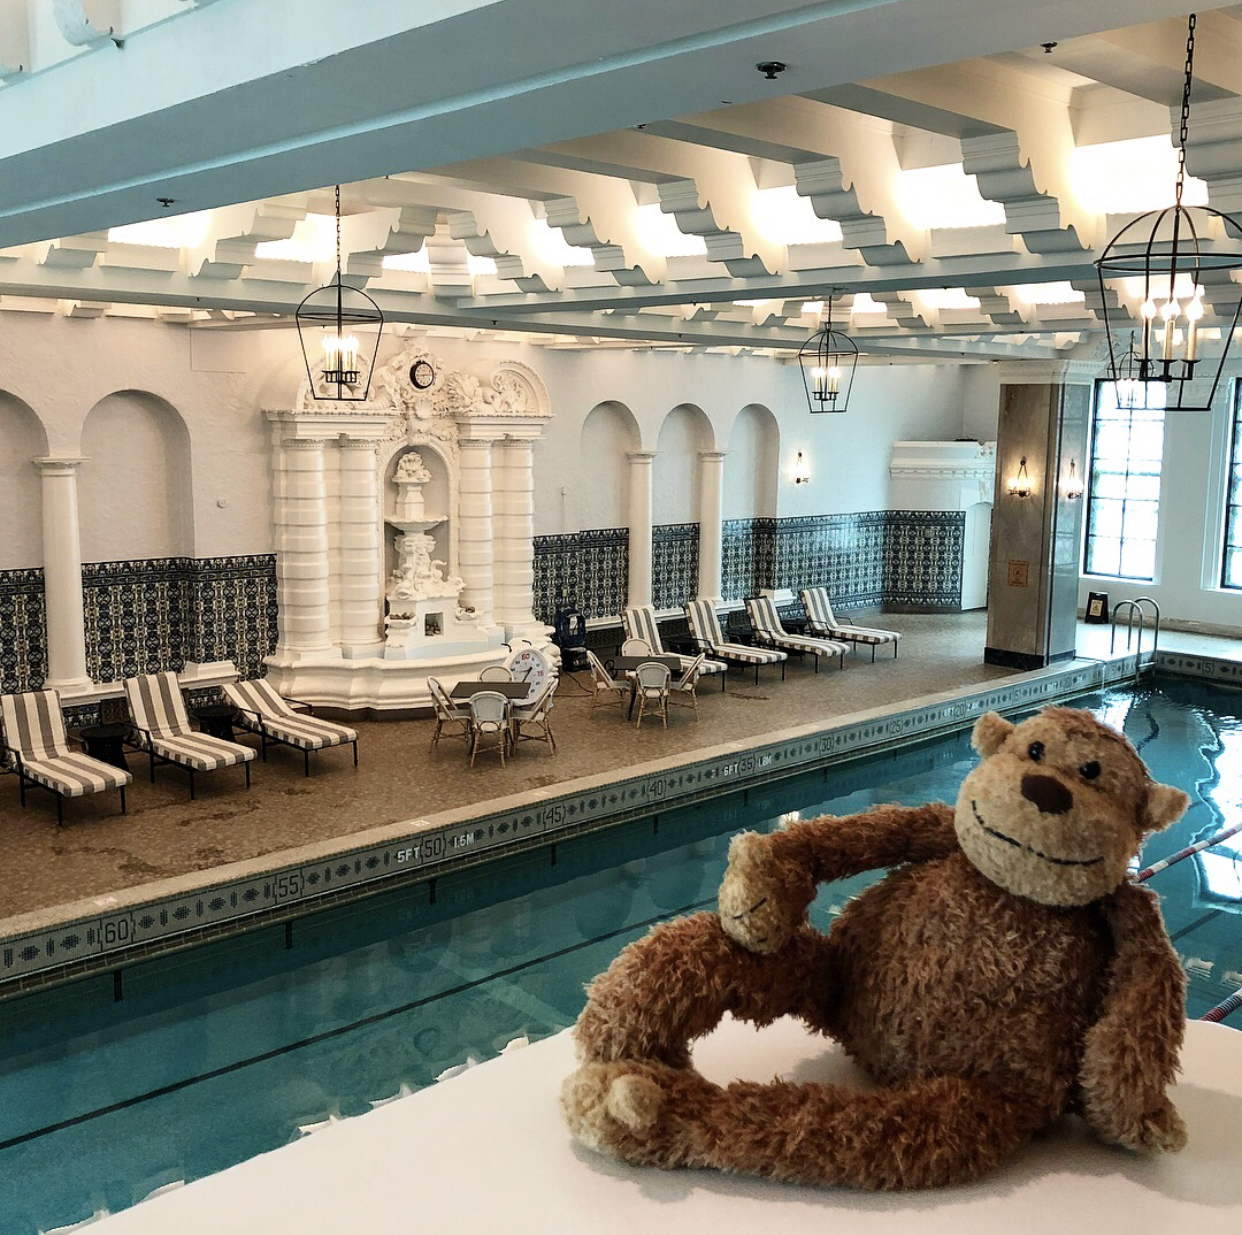 a stuffed animal next to a pool